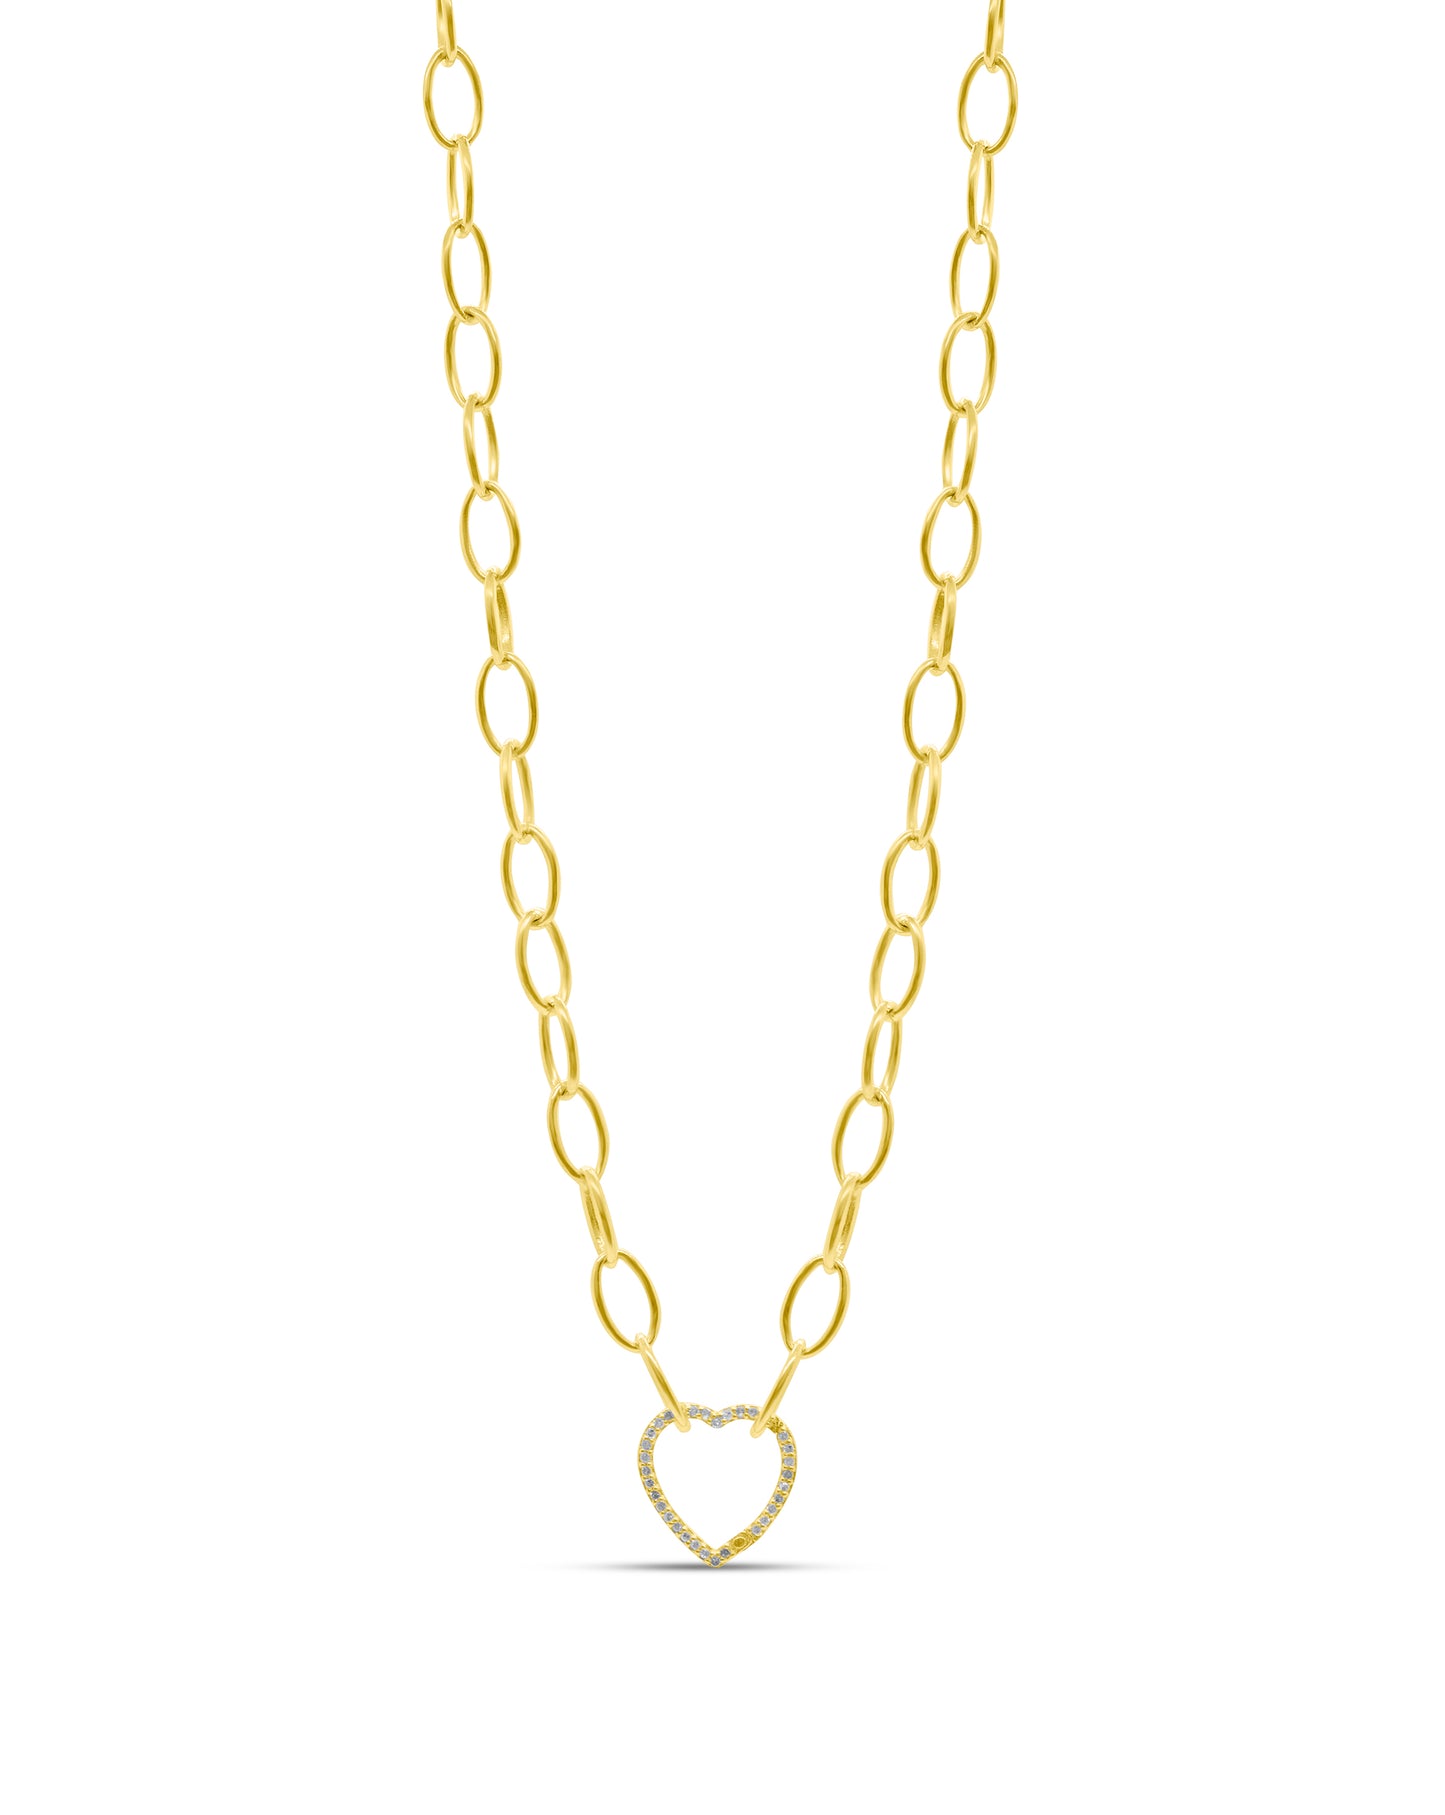 Vermeil Oval Chain with Heart Diamond Clasp